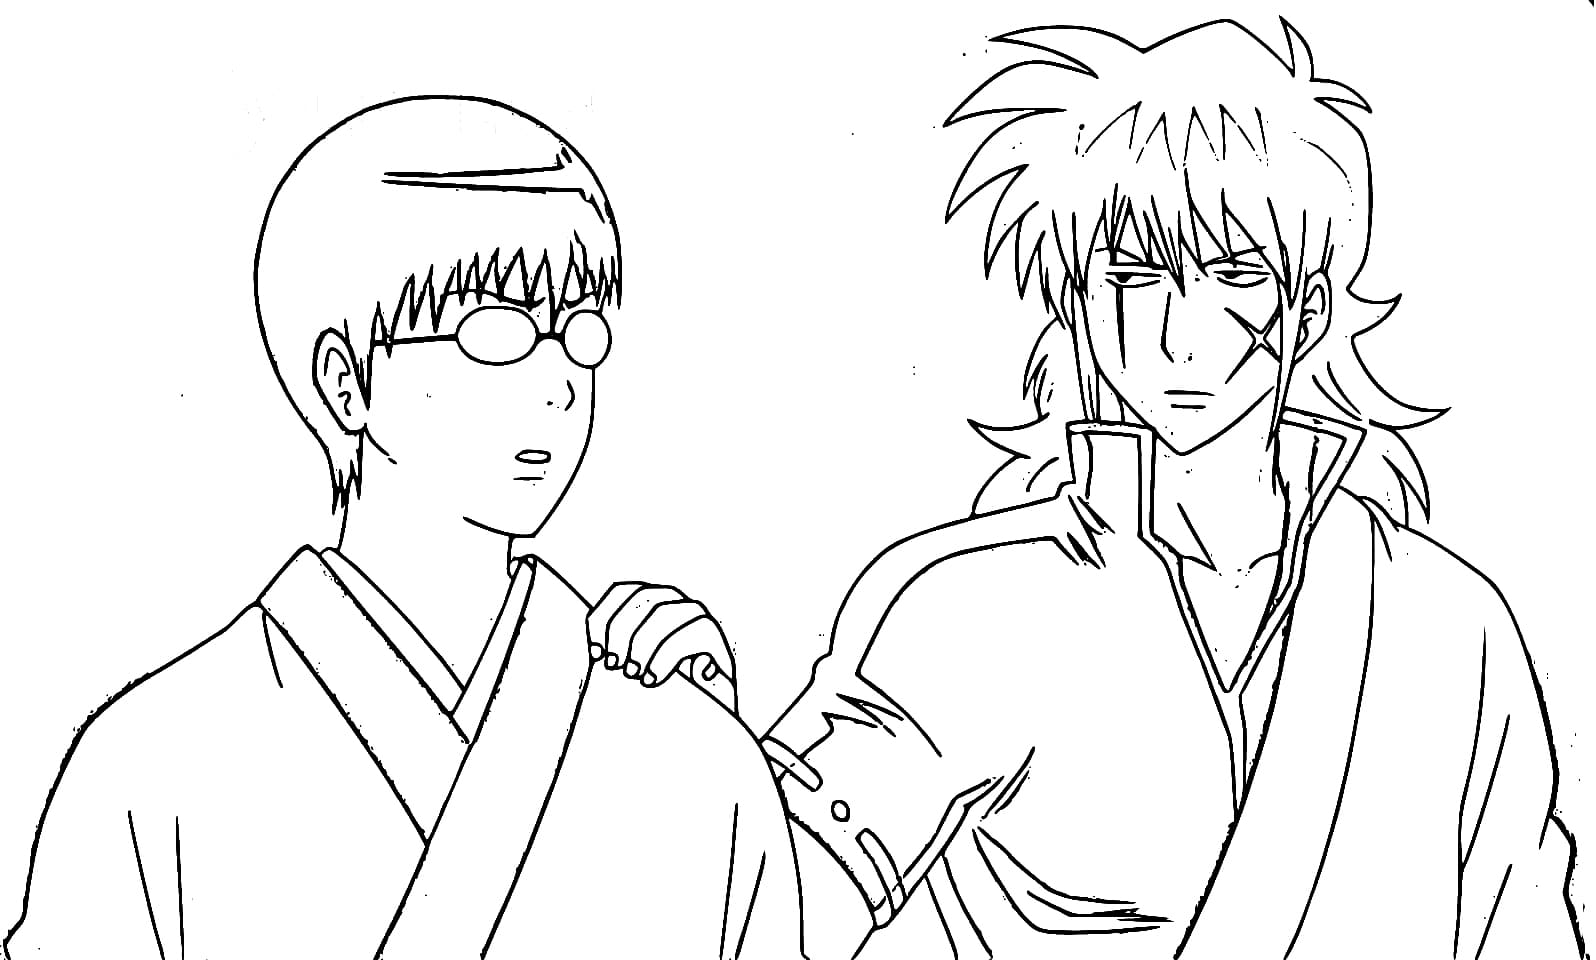 Gintoki and Shinpachi